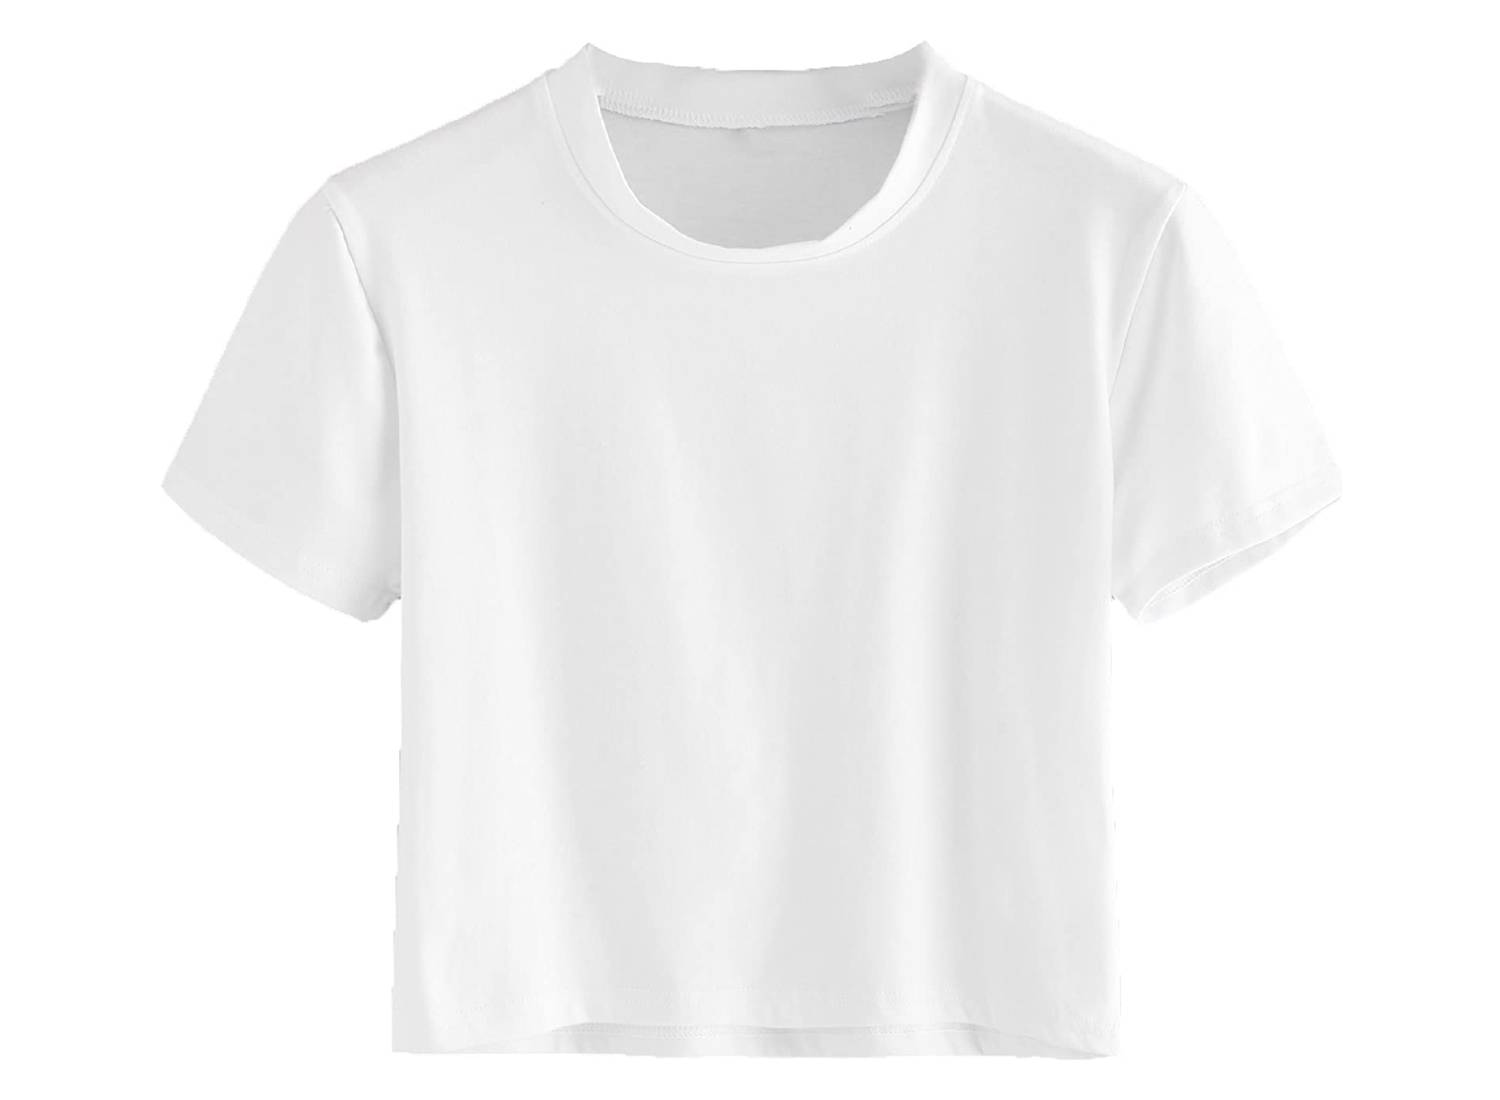 White crewneck cropped top t-shirt